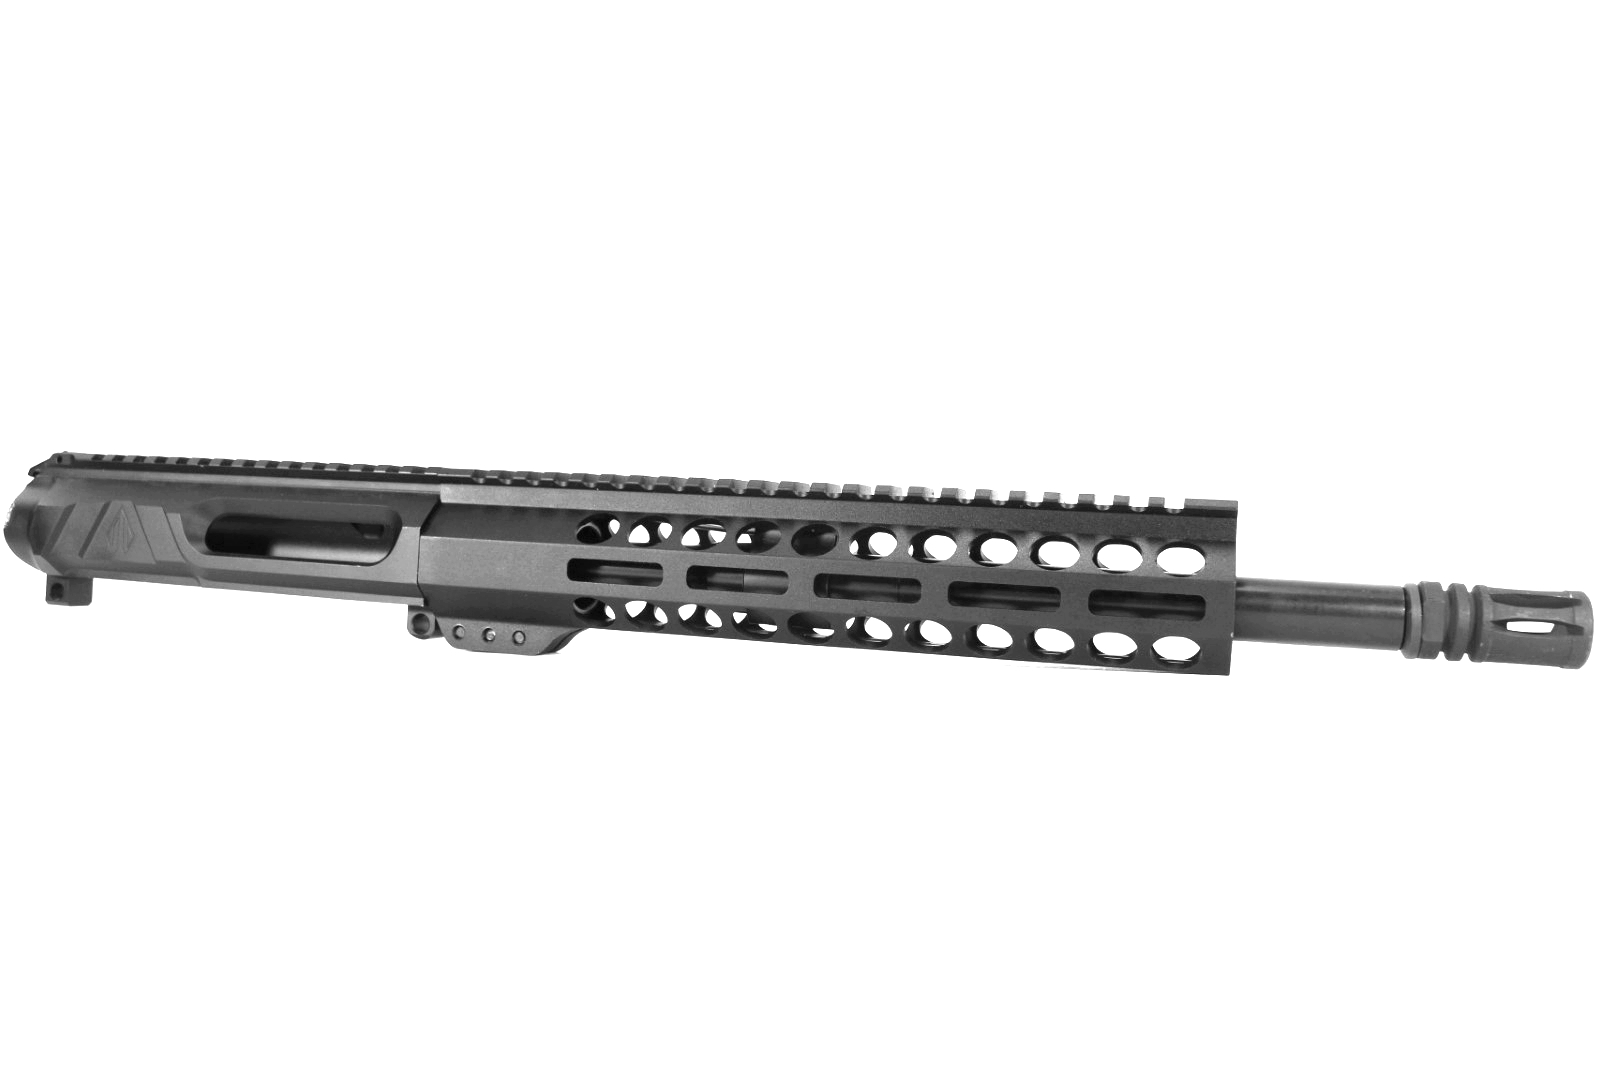 12.5 inch AR-15 NR Side Charging 300 Blackout M-LOK Melonite Upper